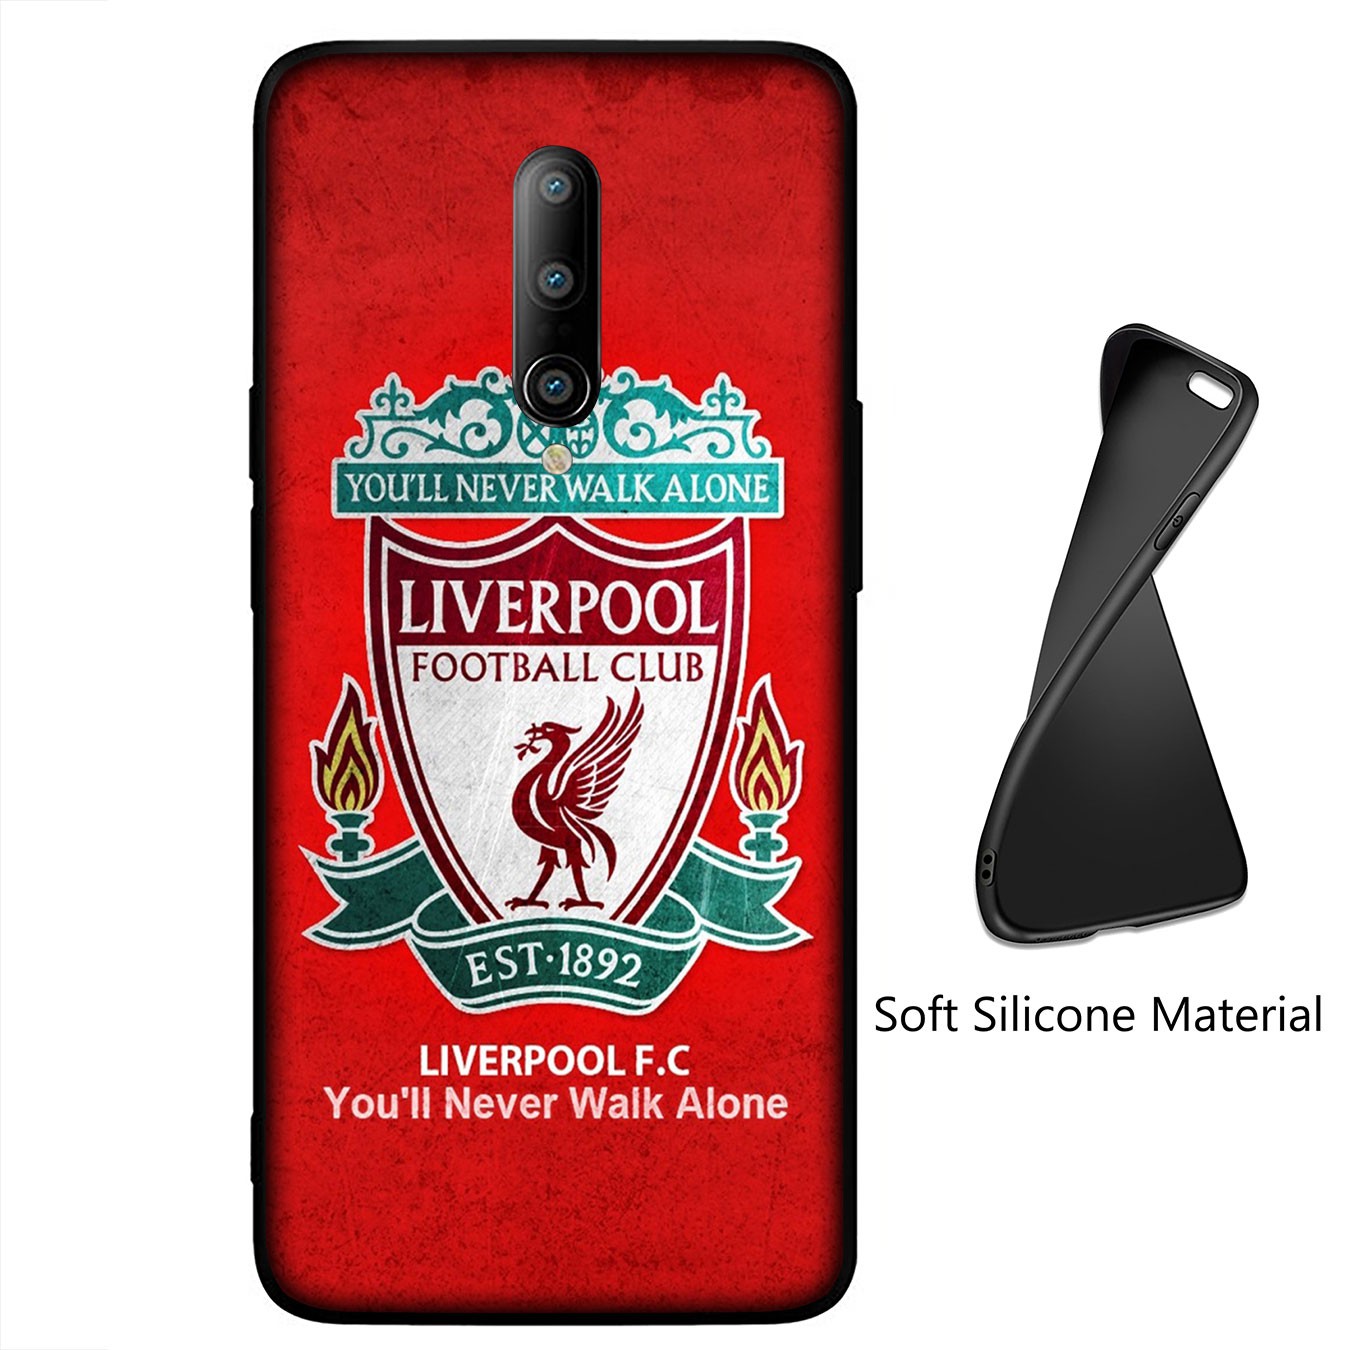 Ốp Điện Thoại Silicon Mềm In Logo Liverpool Cho Samsung Galaxy A9 A8 A7 A6 Plus J8 2018 + A21s A70 M20 A6 + A8 + F10